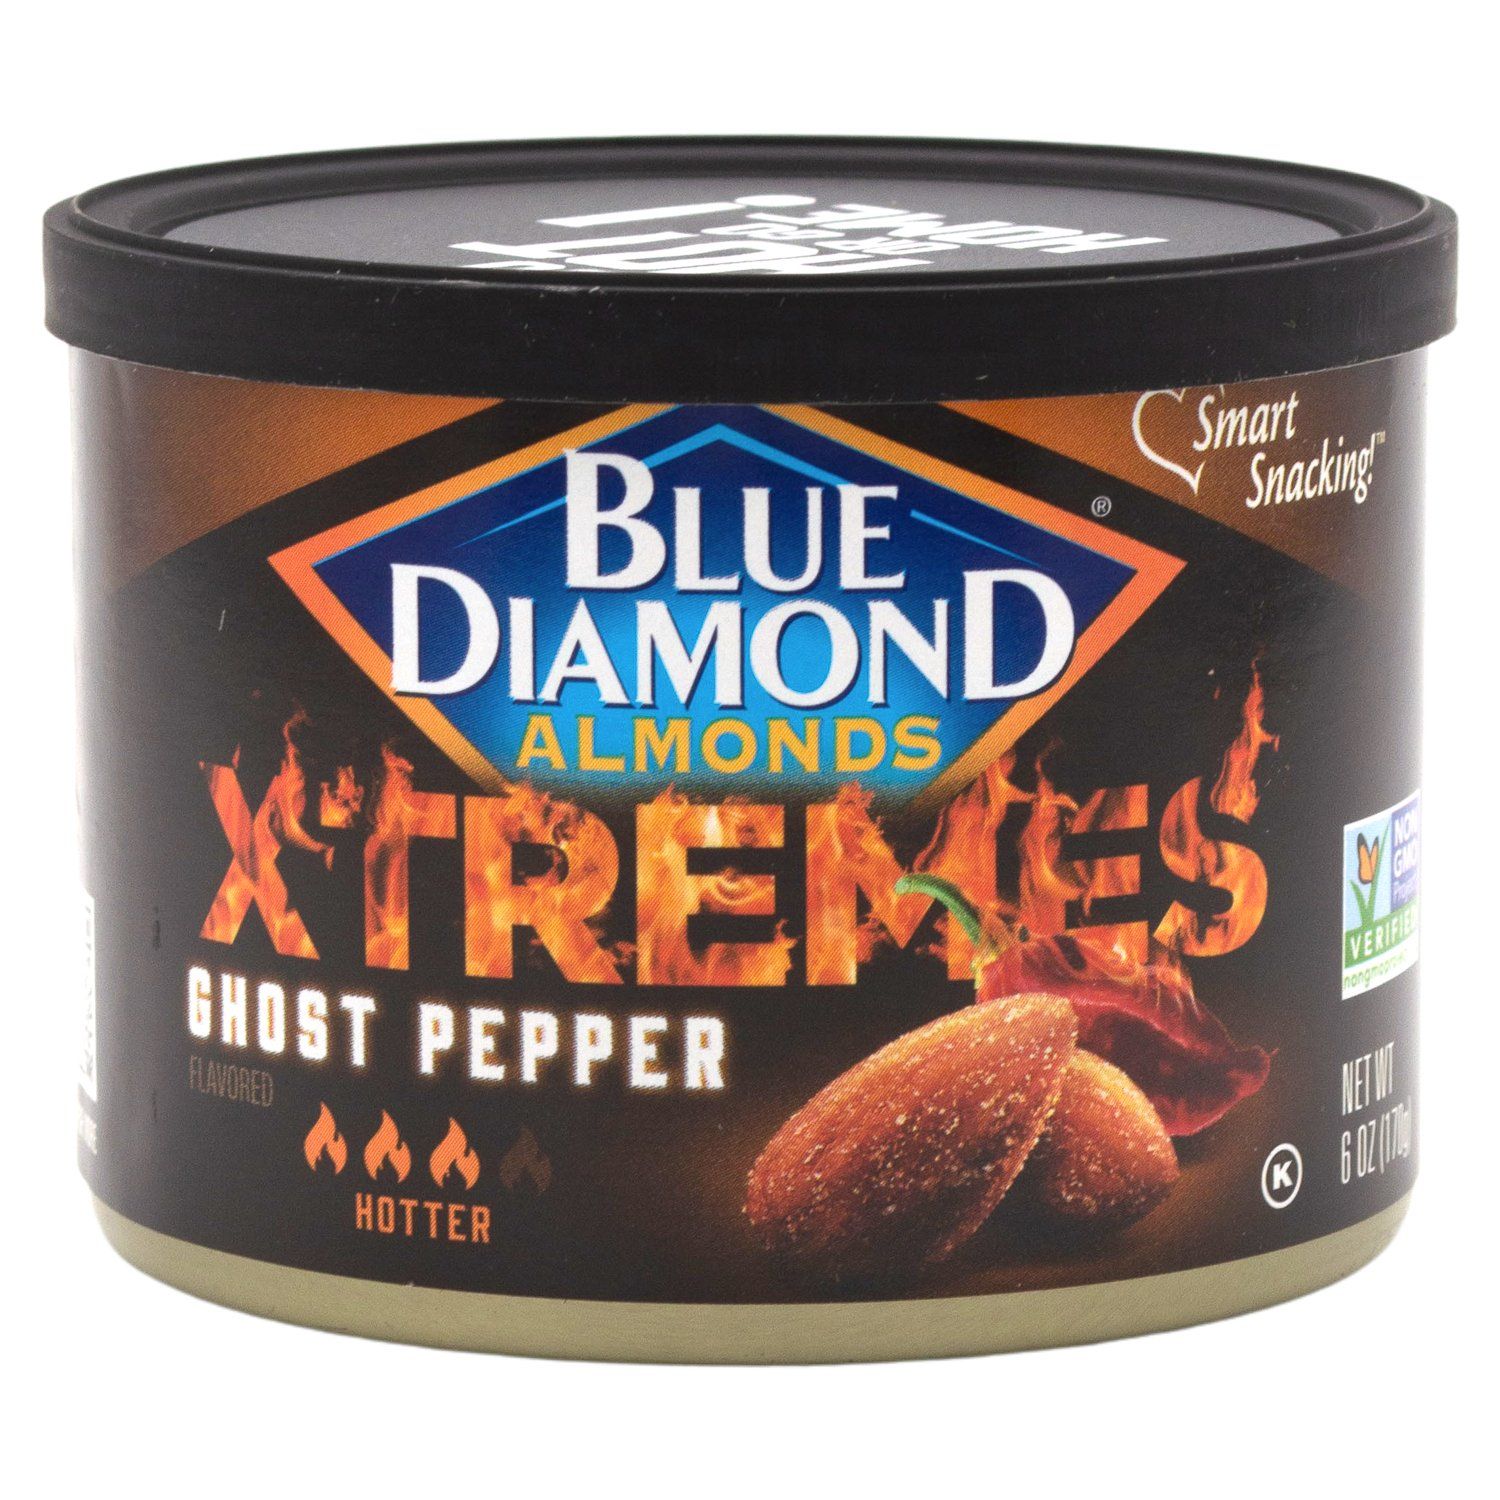 Blue Diamond Almonds Xtremes Blue Diamond Almonds Ghost Pepper 6 Ounce 